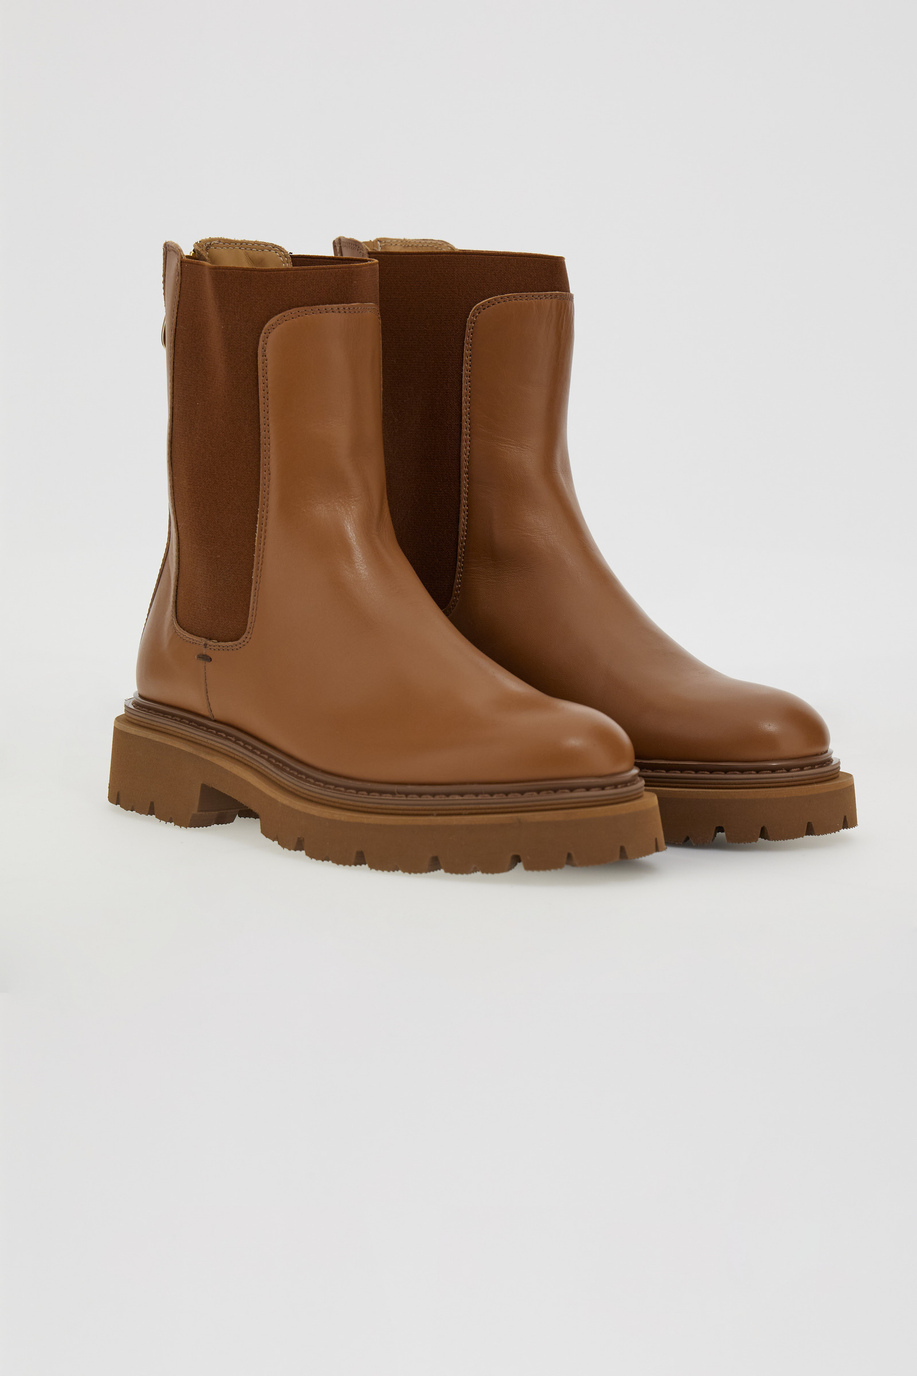 High city boot in pelle - Look invernali per lei | La Martina - Official Online Shop